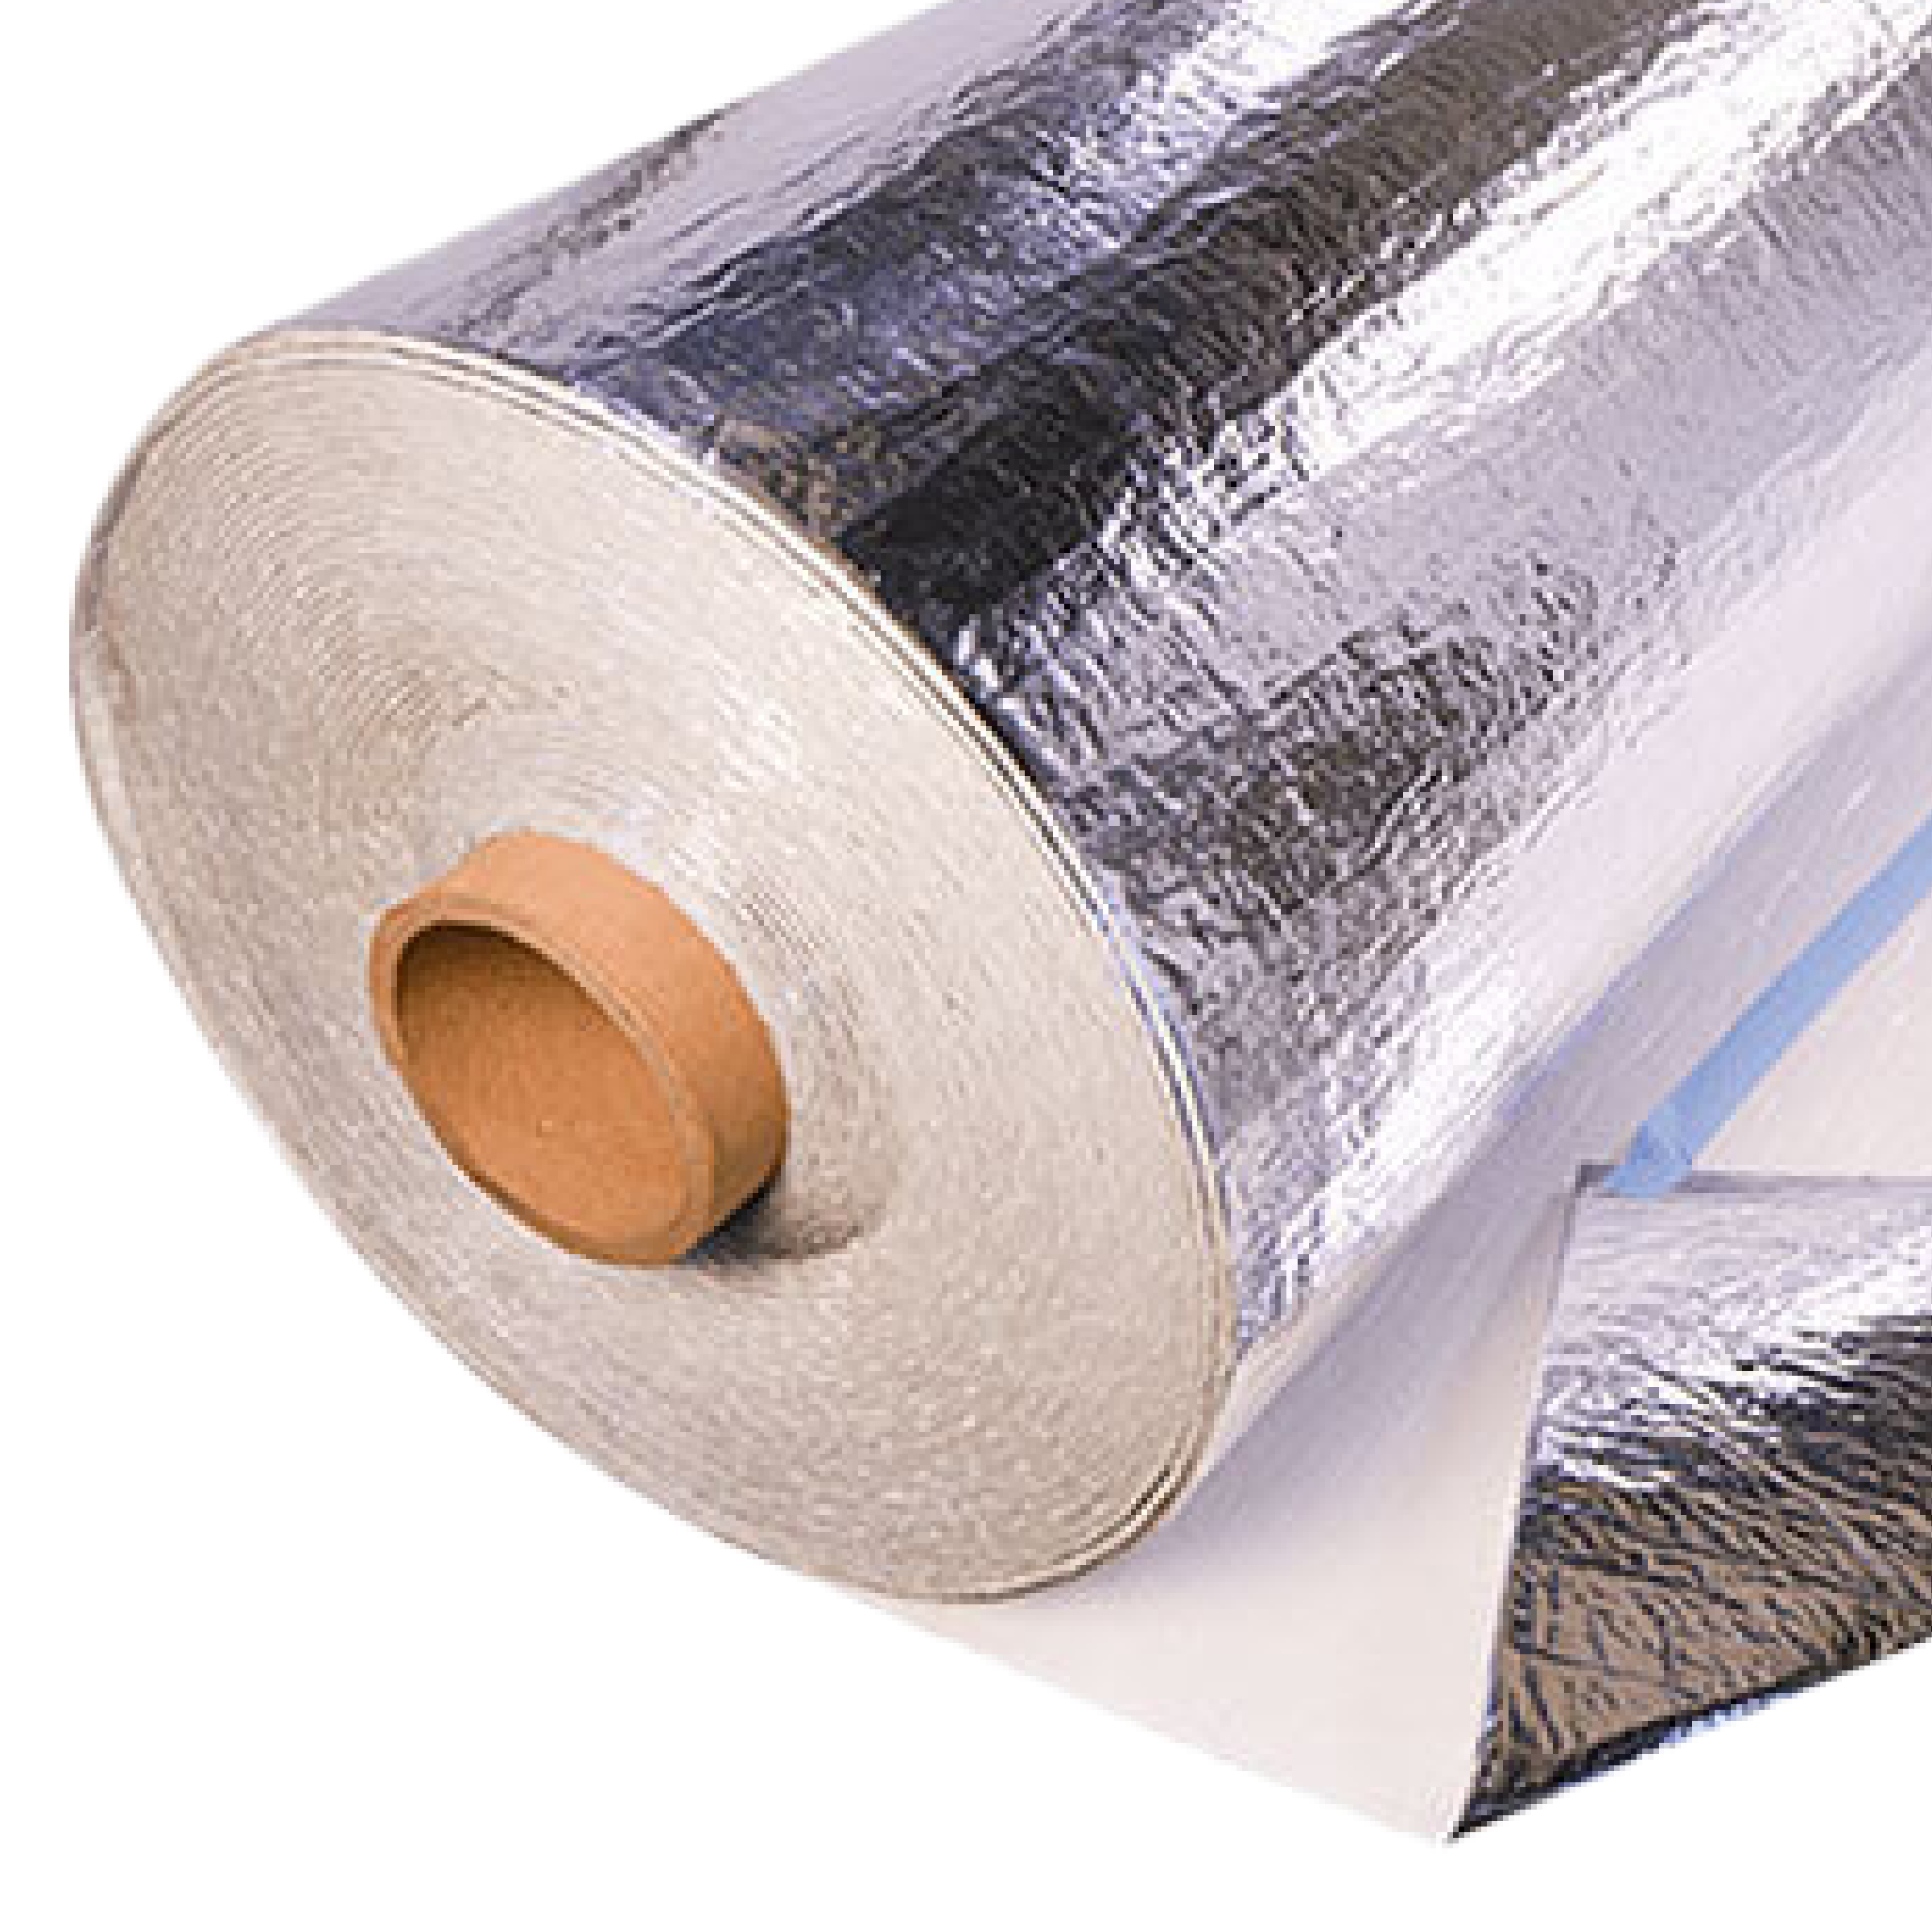 How Aluminum Foil Insulates - Radiant Barrier & Foil Insulation